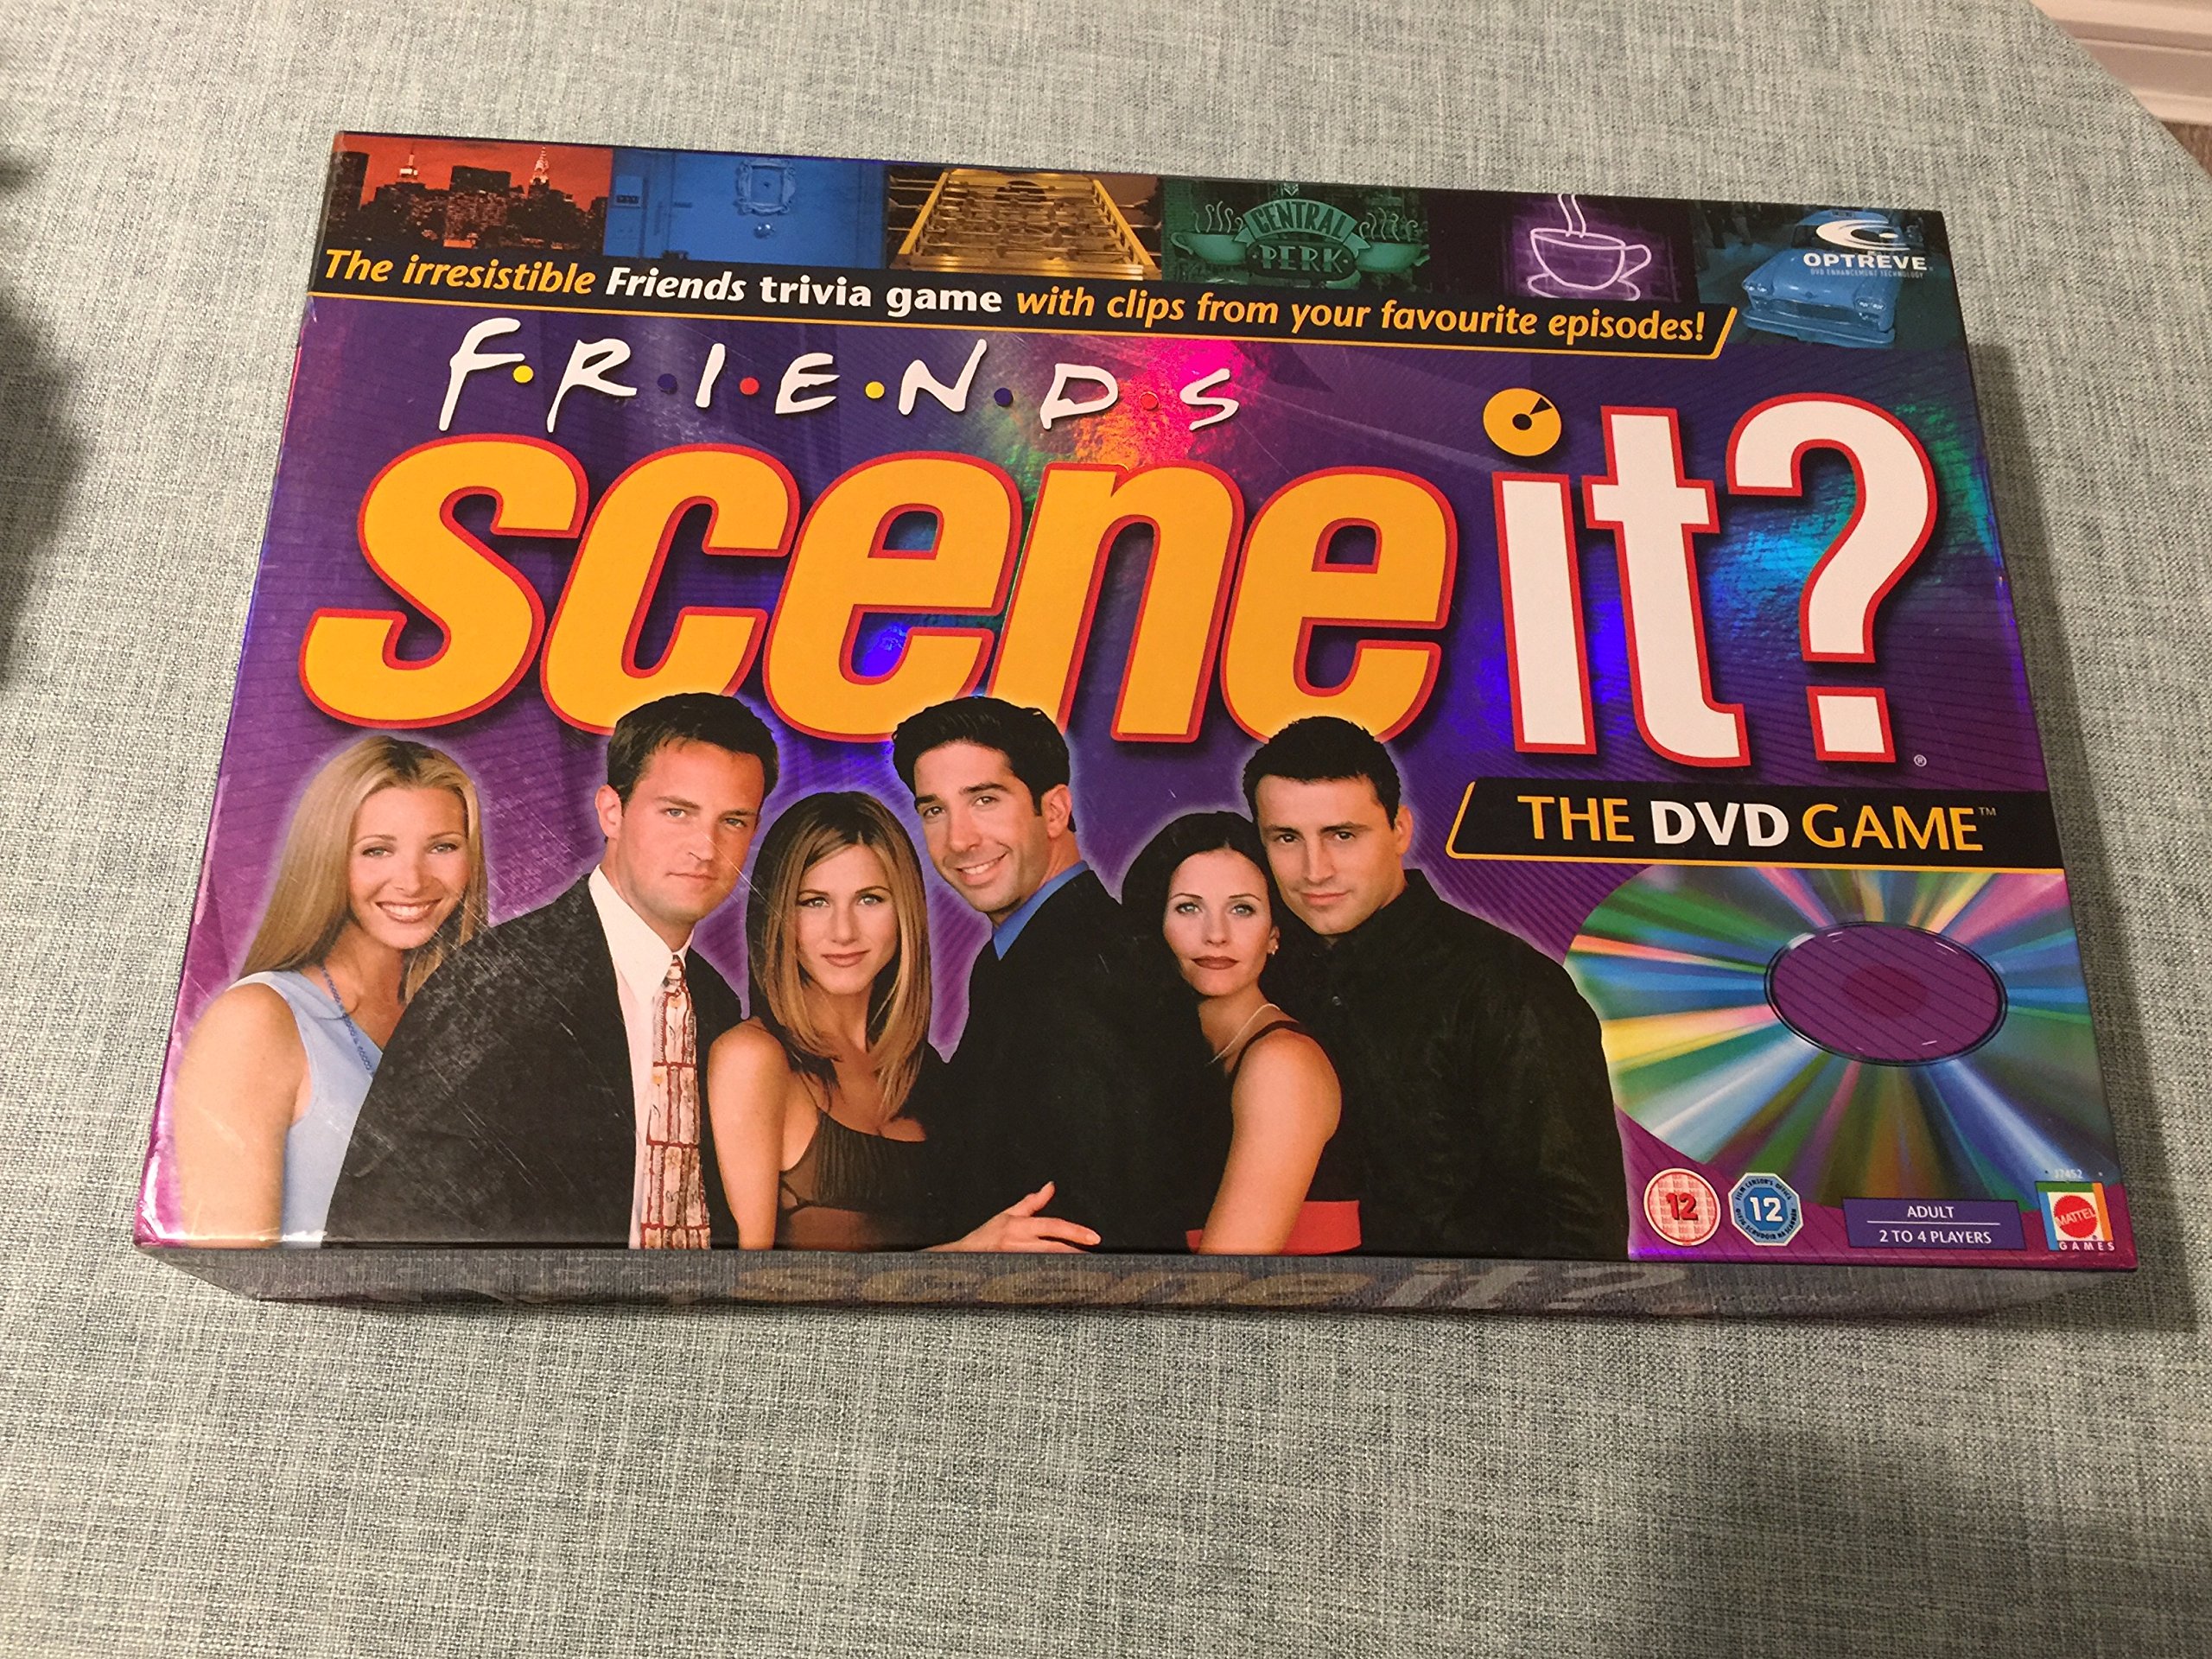 Scene It? Friends Edition DVD Game